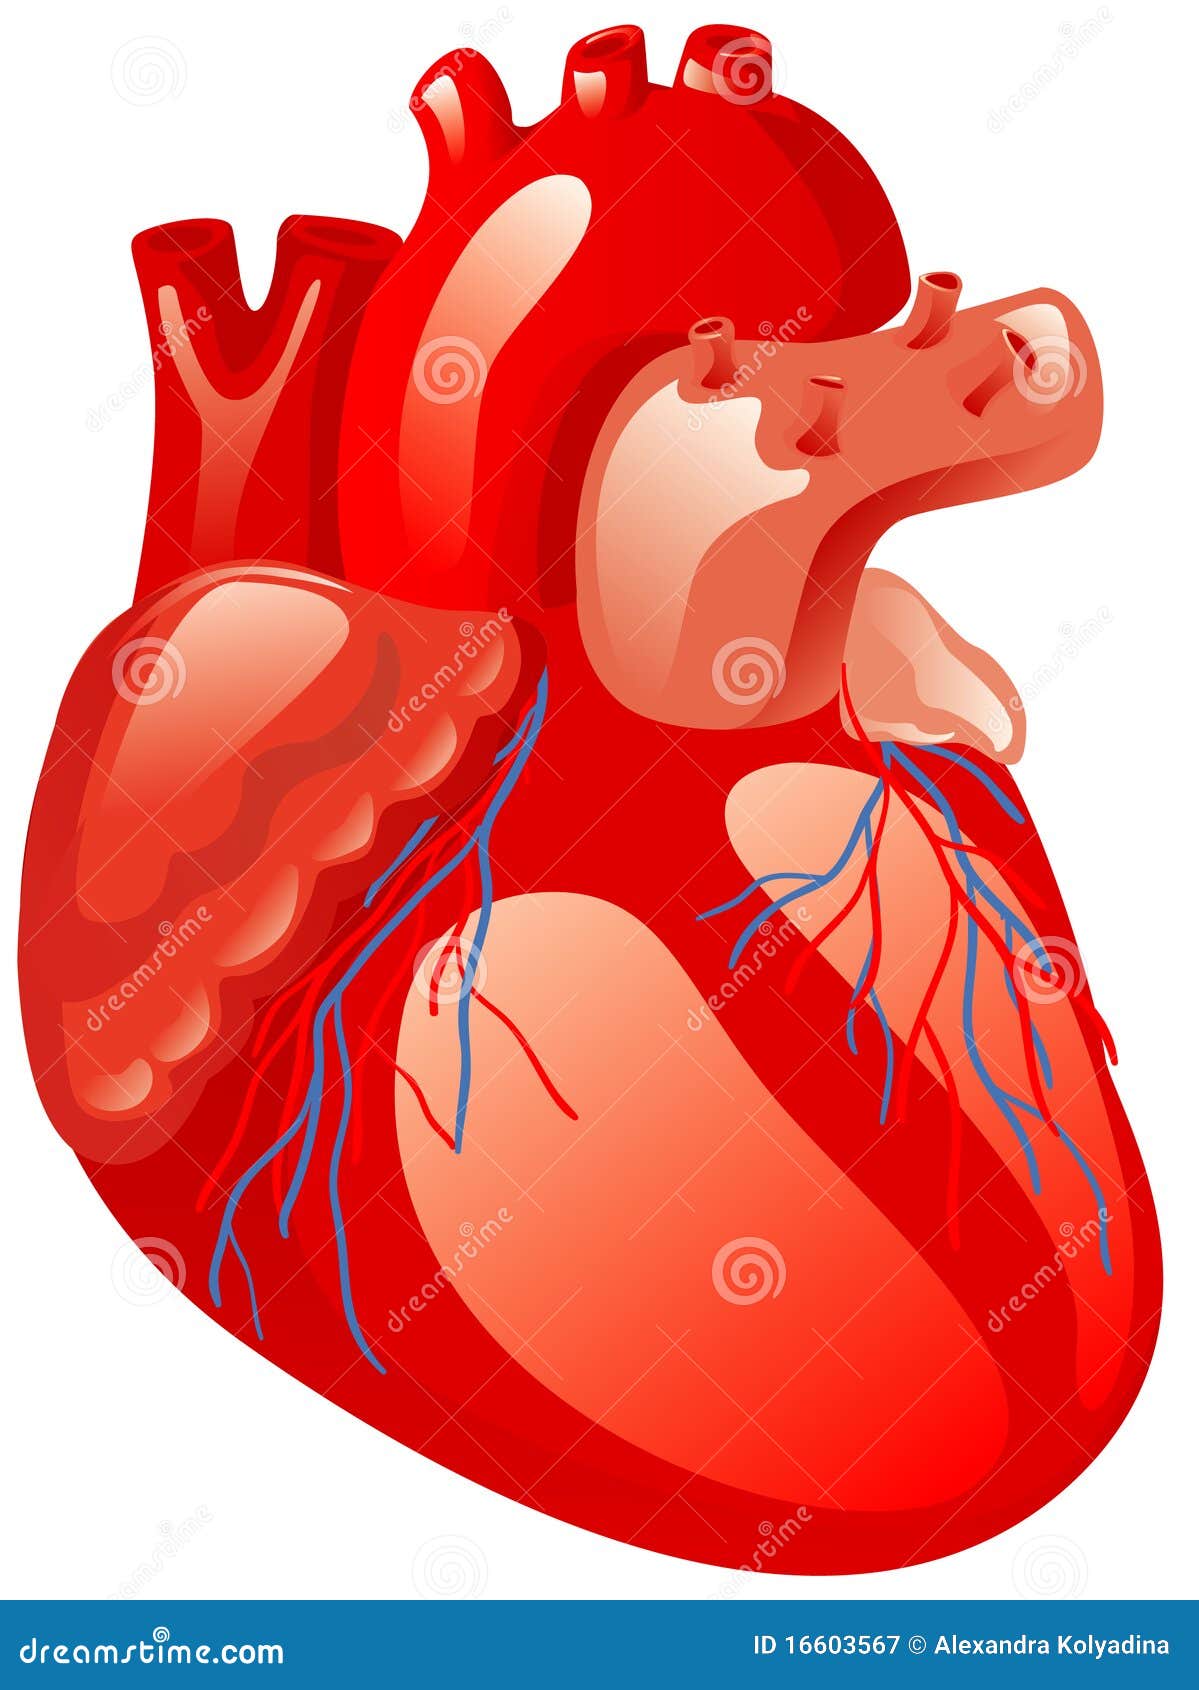 free human heart clip art - photo #32